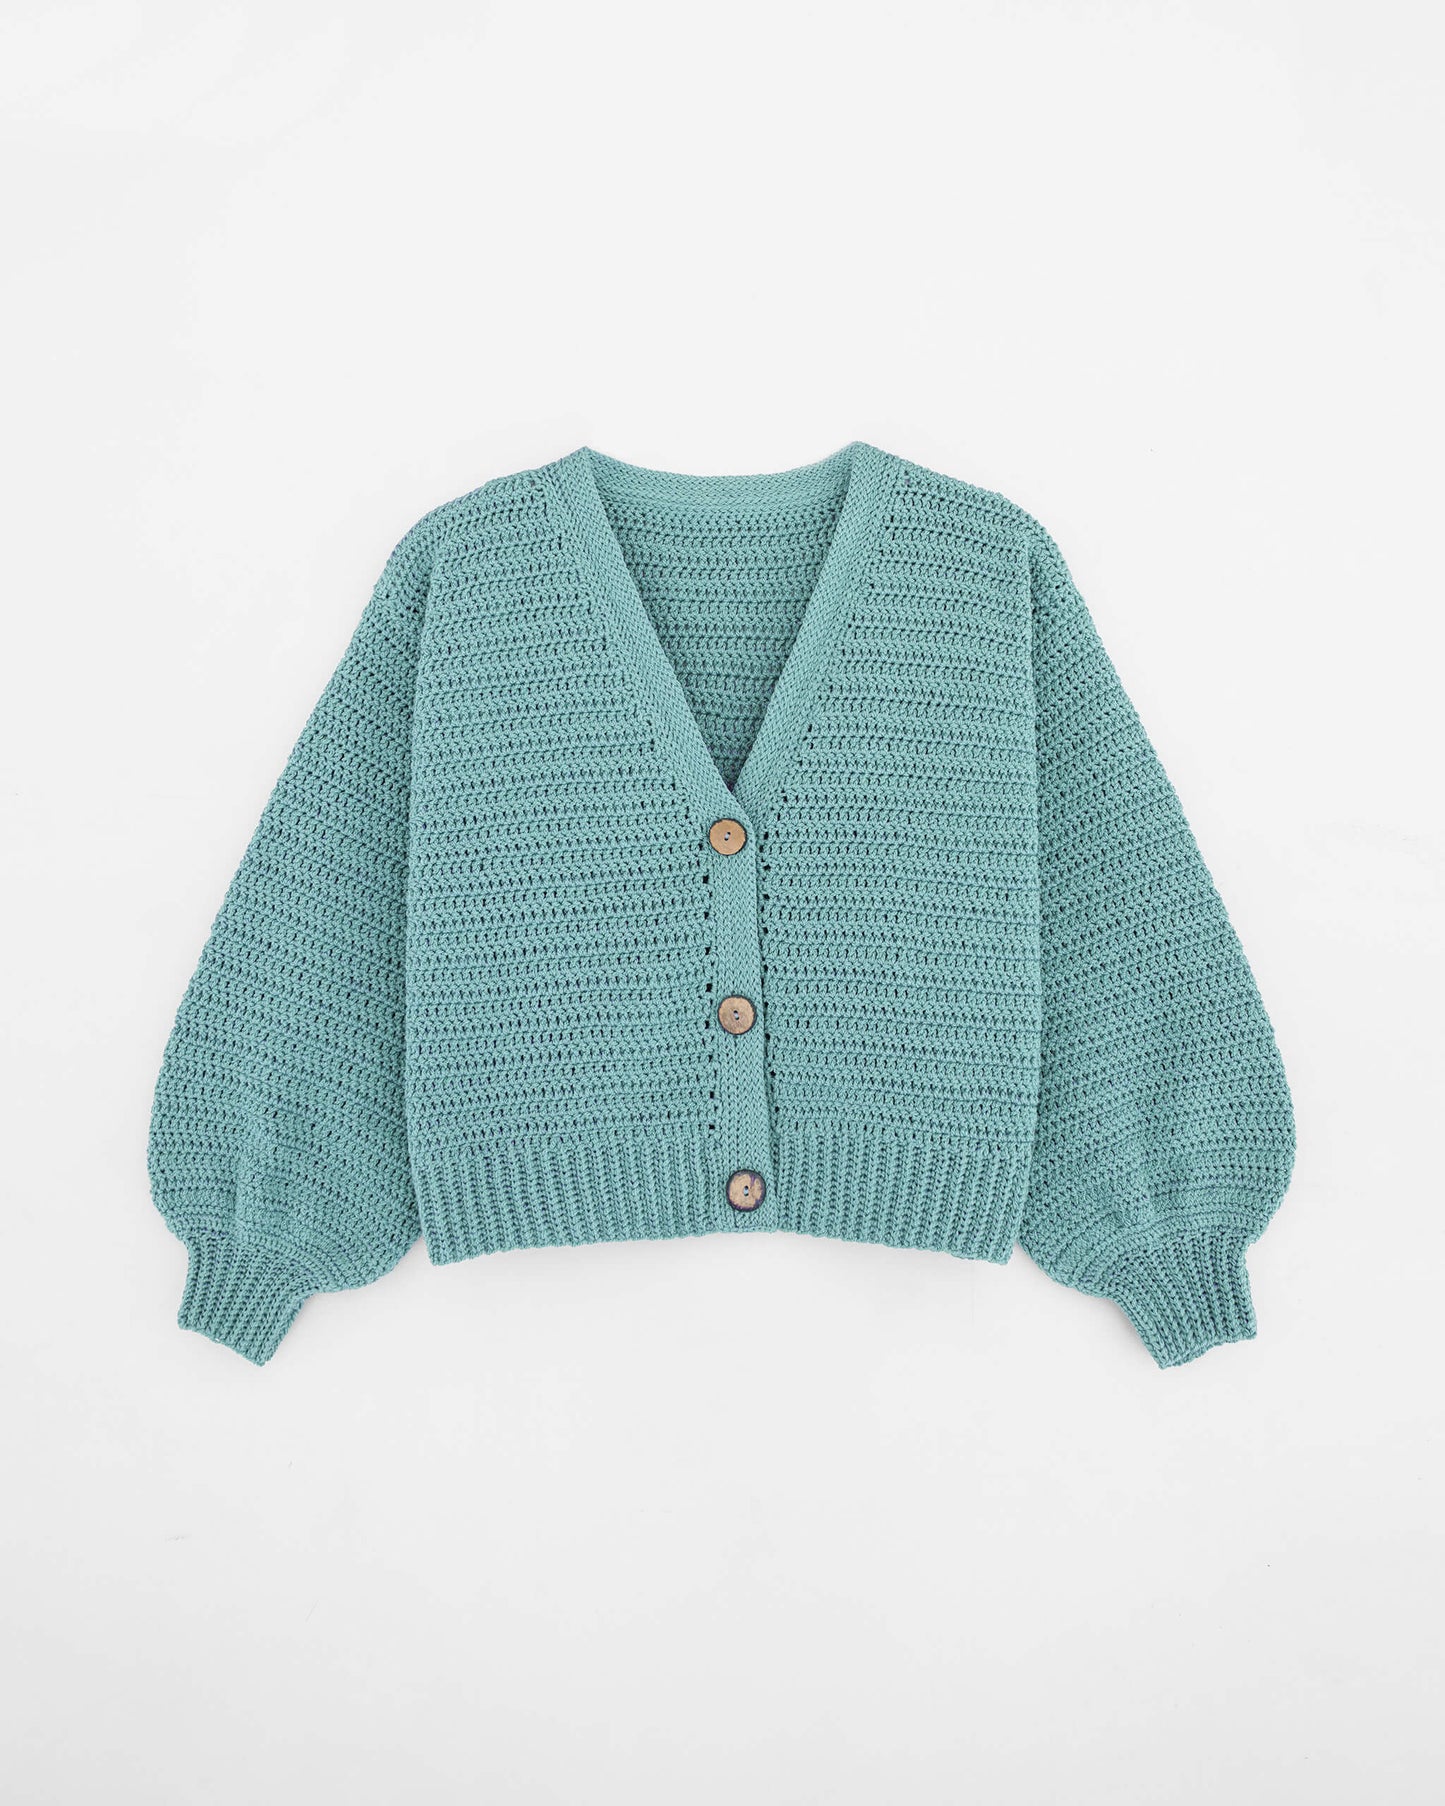 Kids' Cardigan No.7 | Crochet V-neck cardigan pattern